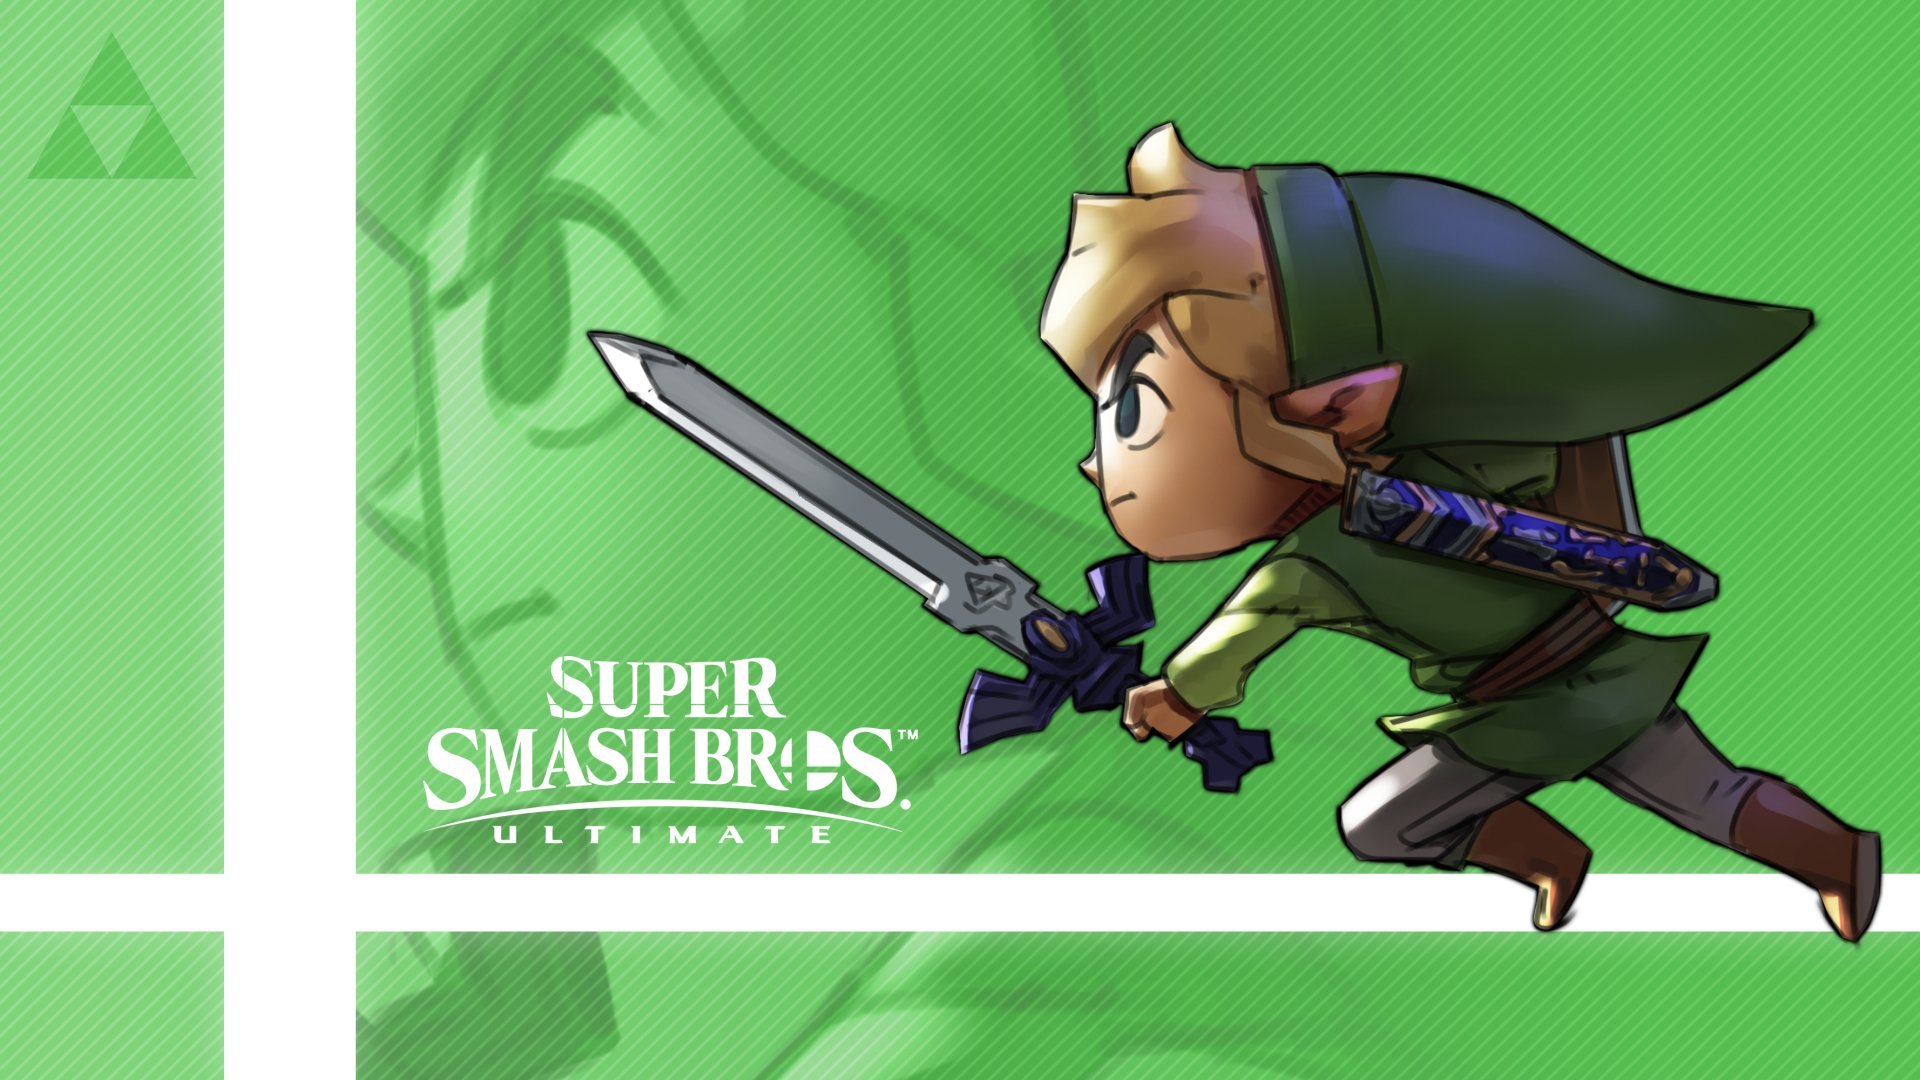 Toon Link In Super Smash Bros Ultimate By Callum Nakajima